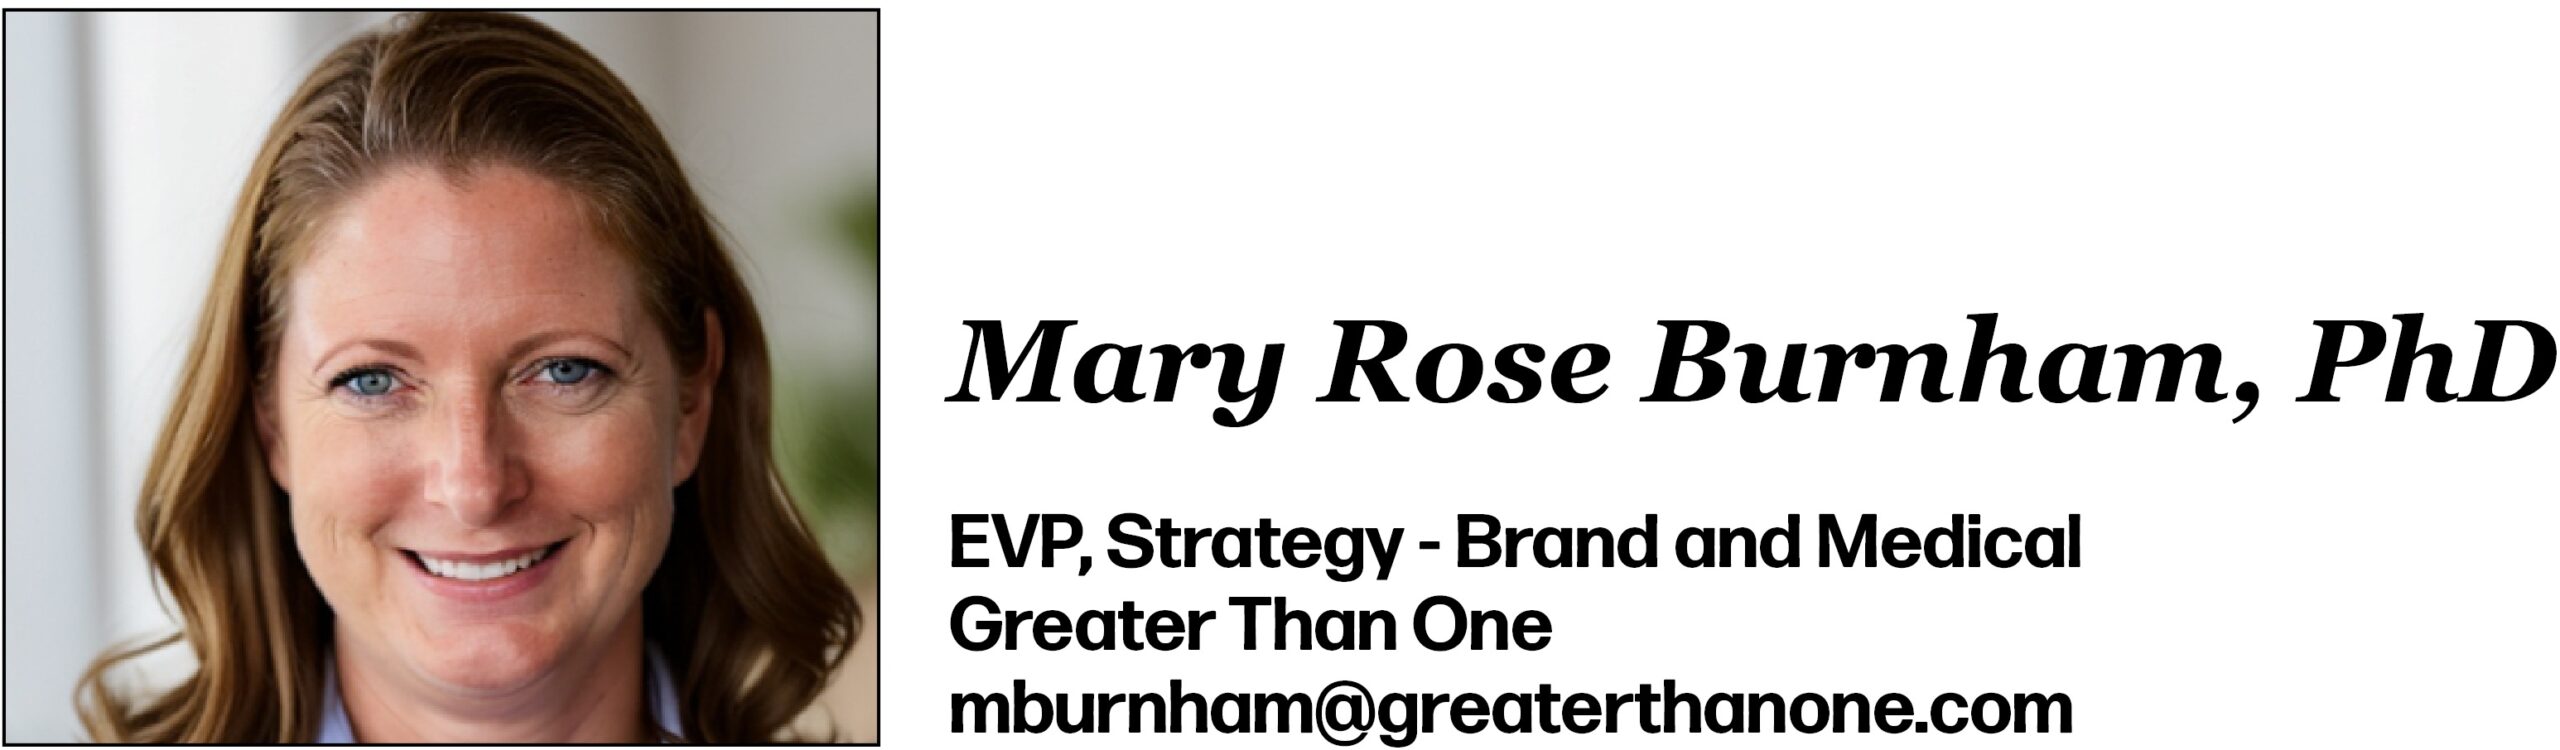 Mary Rose Burnham, PhD EVP, Strategy - Brand and Medical Greater Than One mburnham@greaterthanone.com